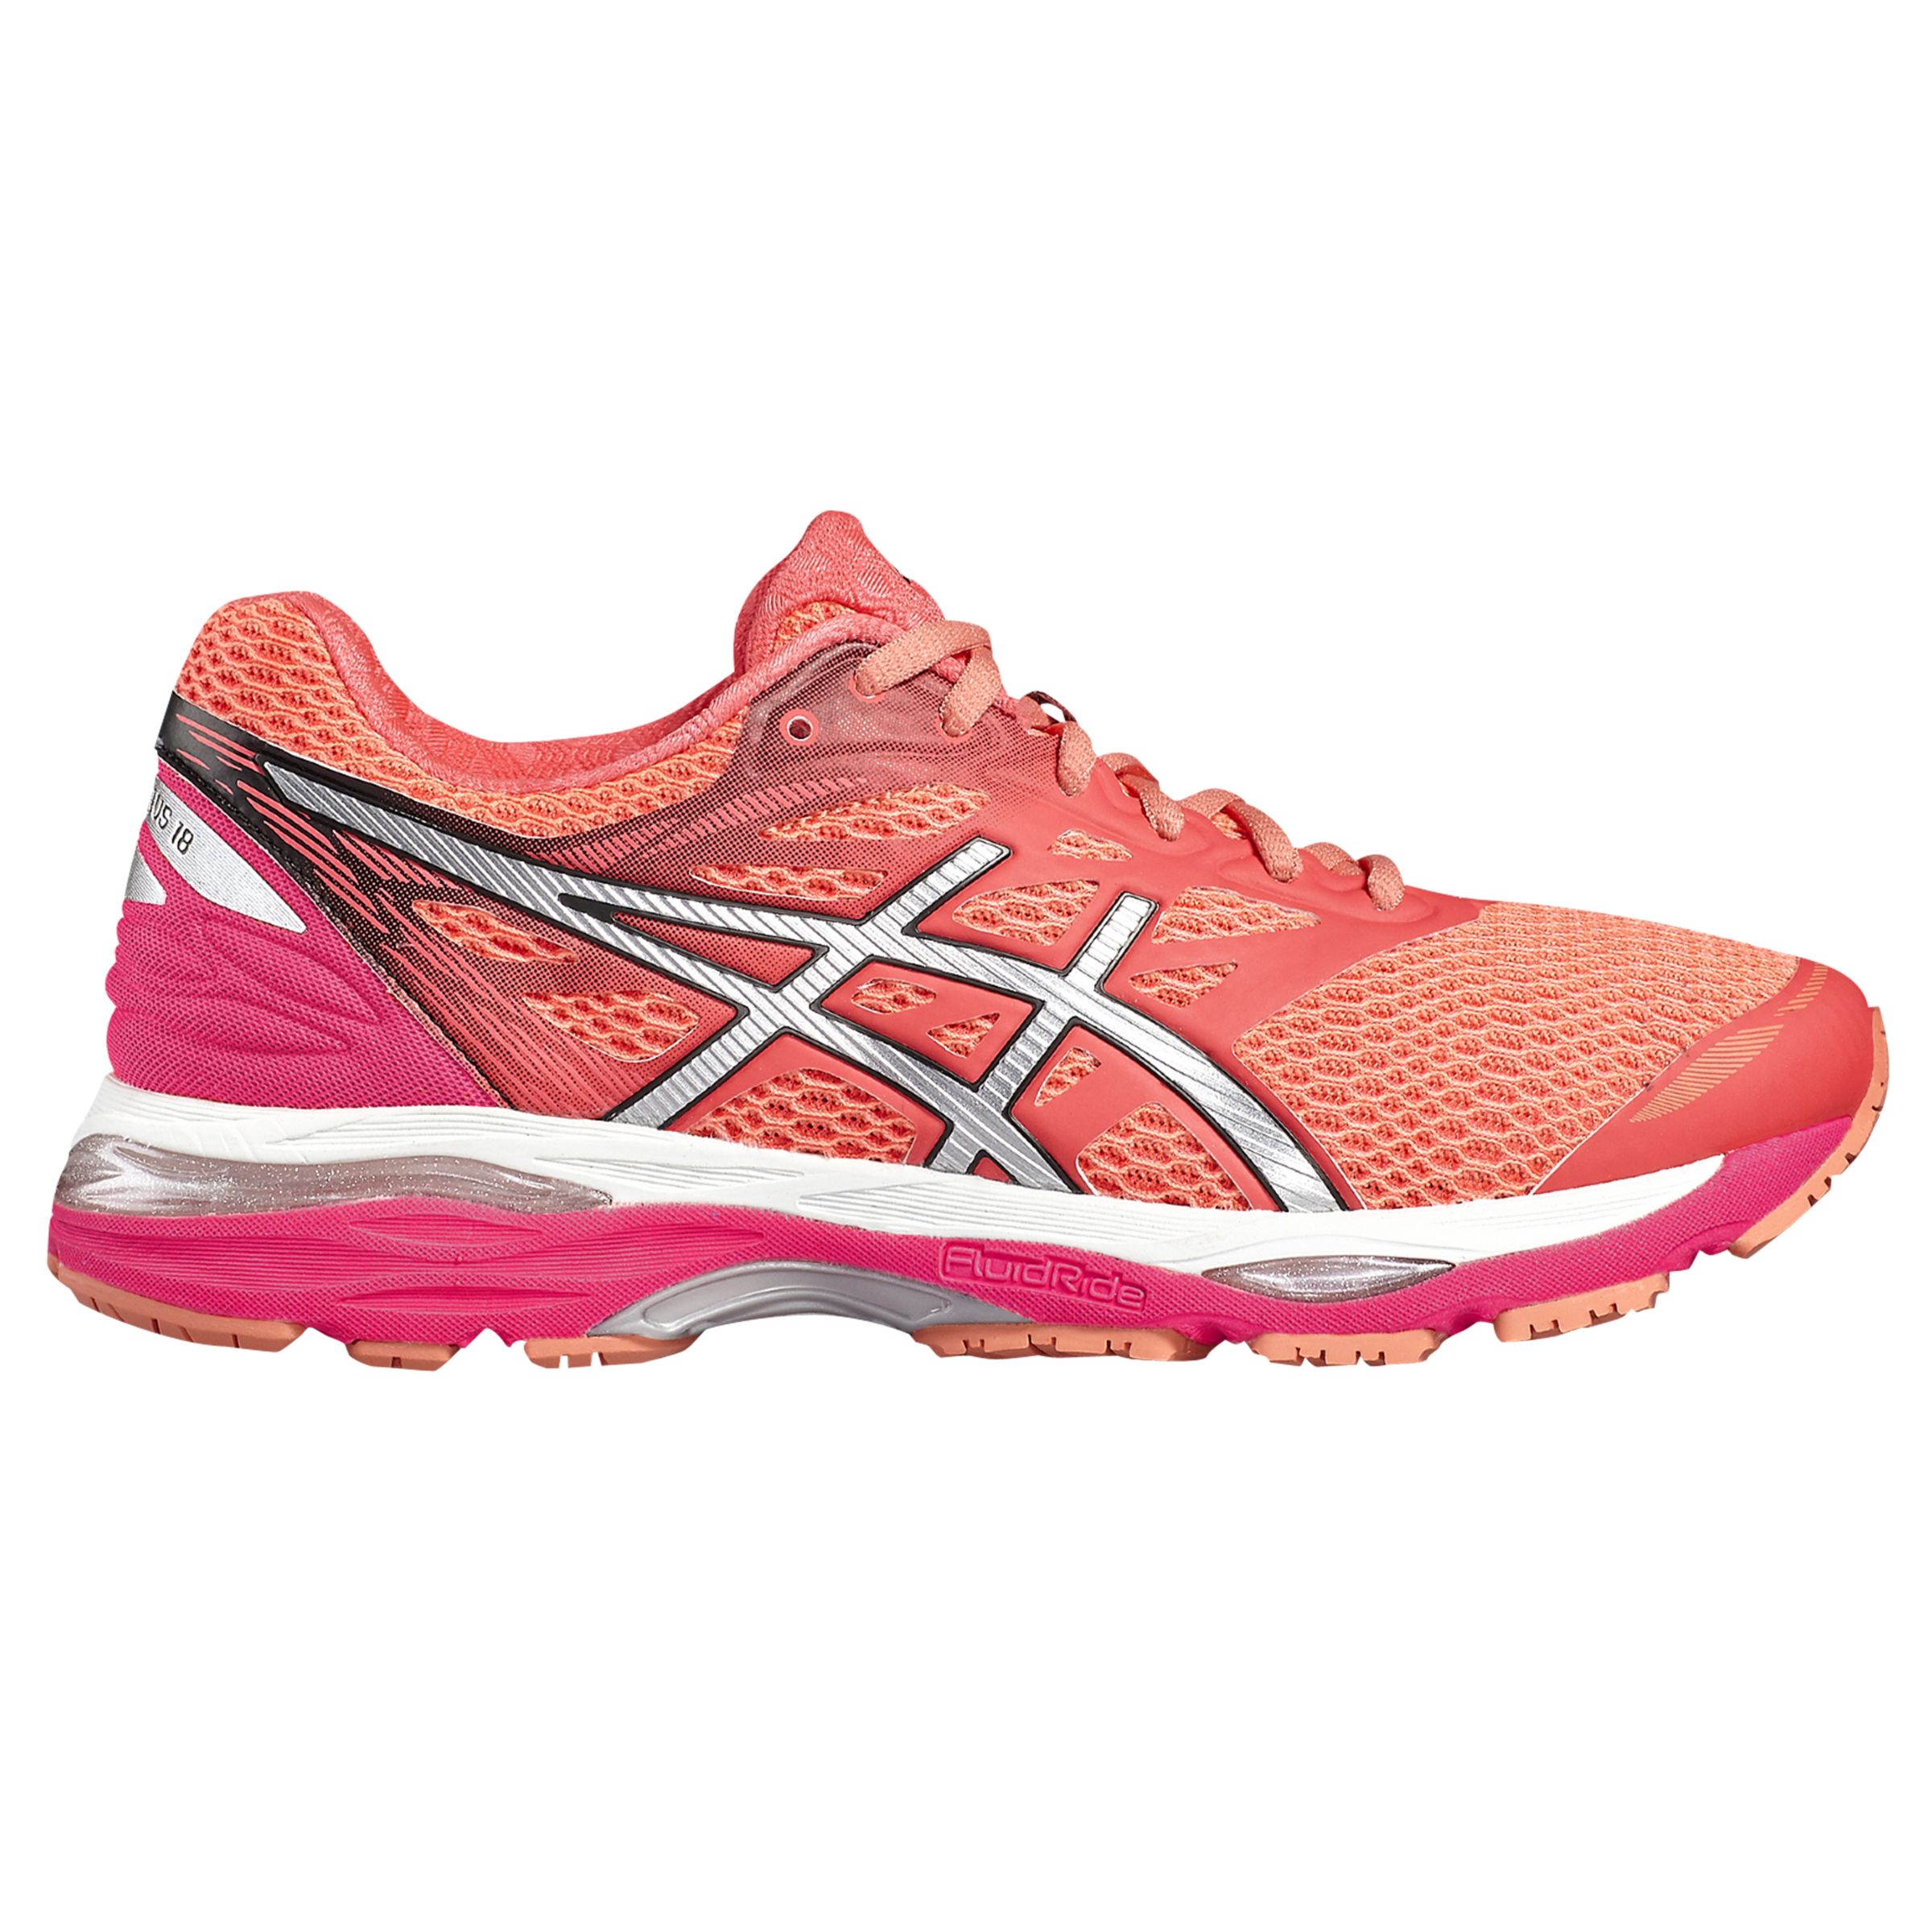 Asics GEL-CUMULUS 18 Women's Running Shoes, Pink/Silver